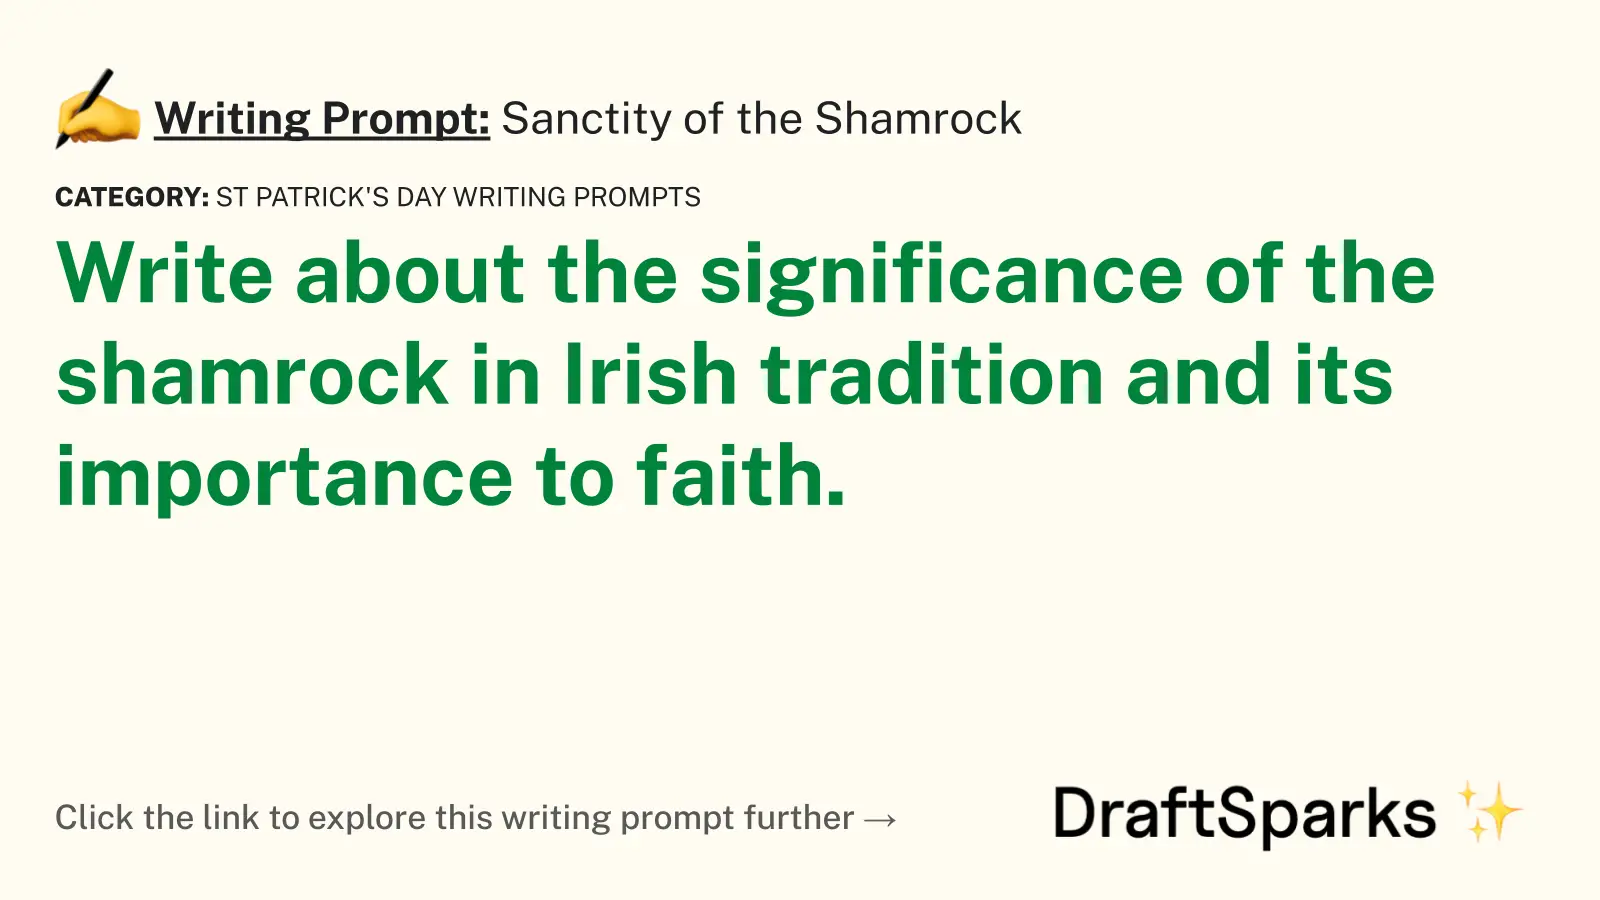 Sanctity of the Shamrock